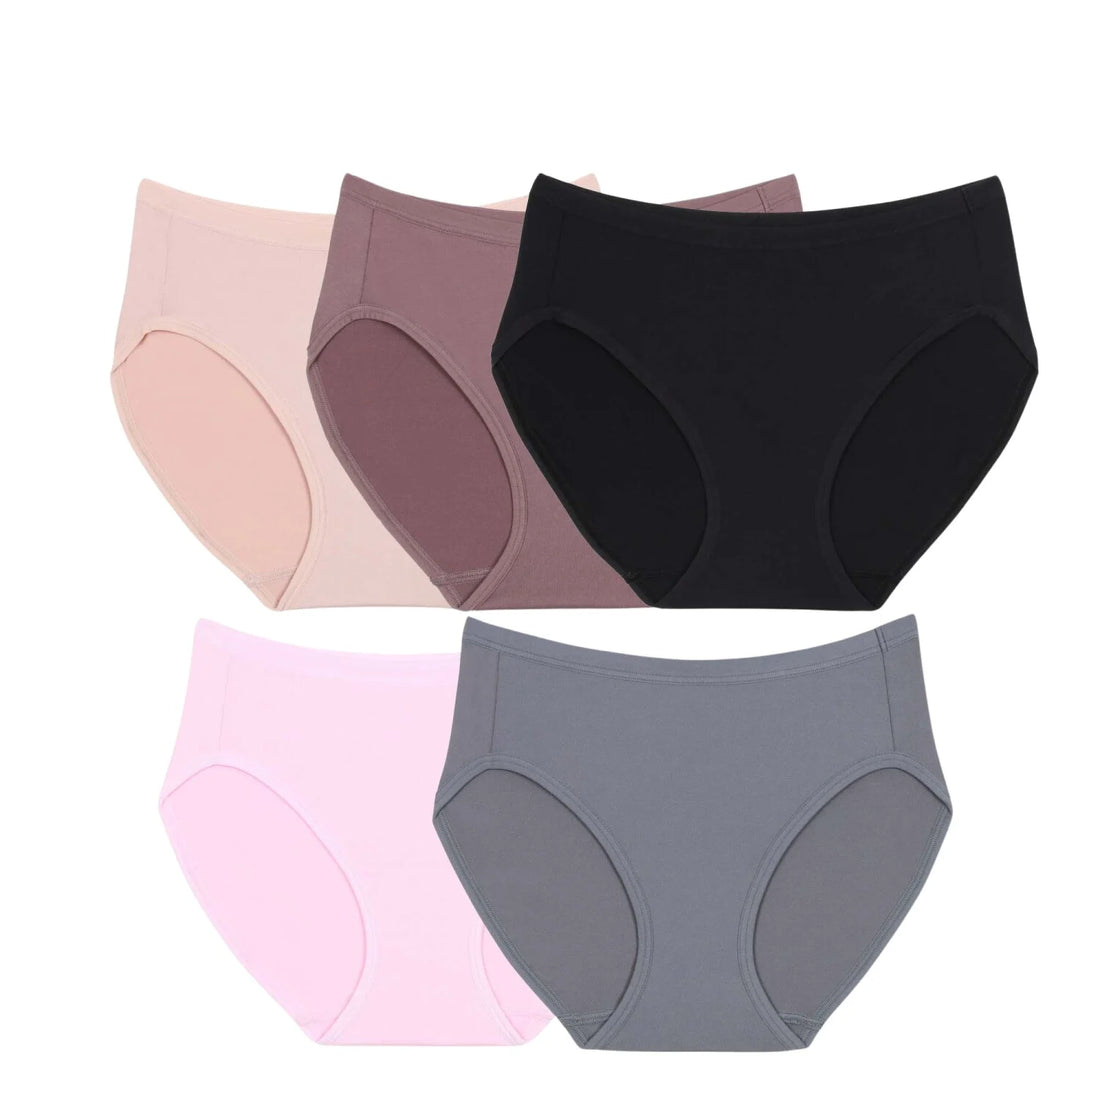 Wacoal Panty pack, comfortable underwear Bikini pattern set 5